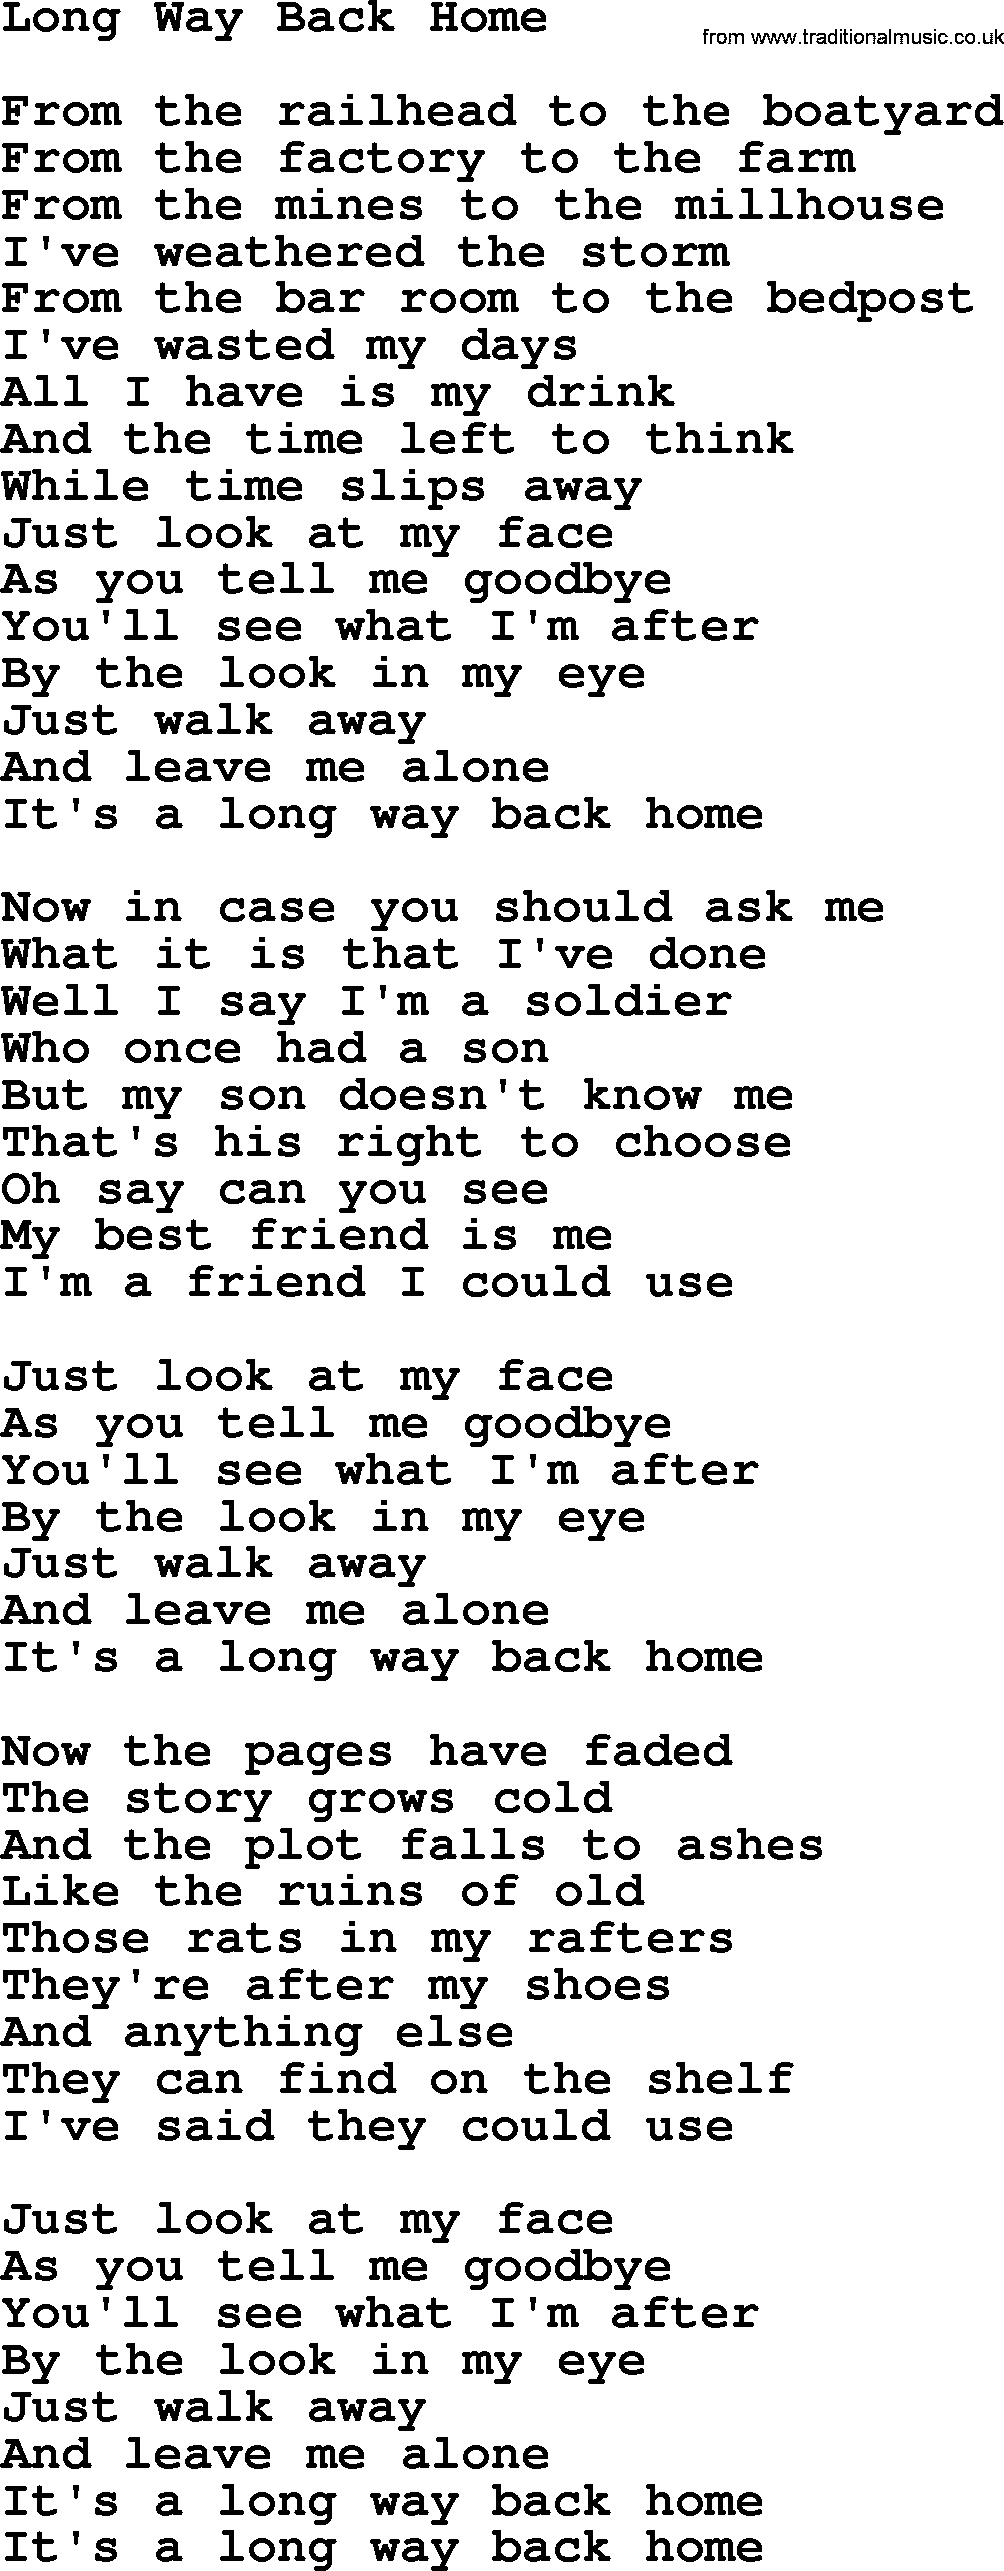 Gordon Lightfoot song Long Way Back Home, lyrics